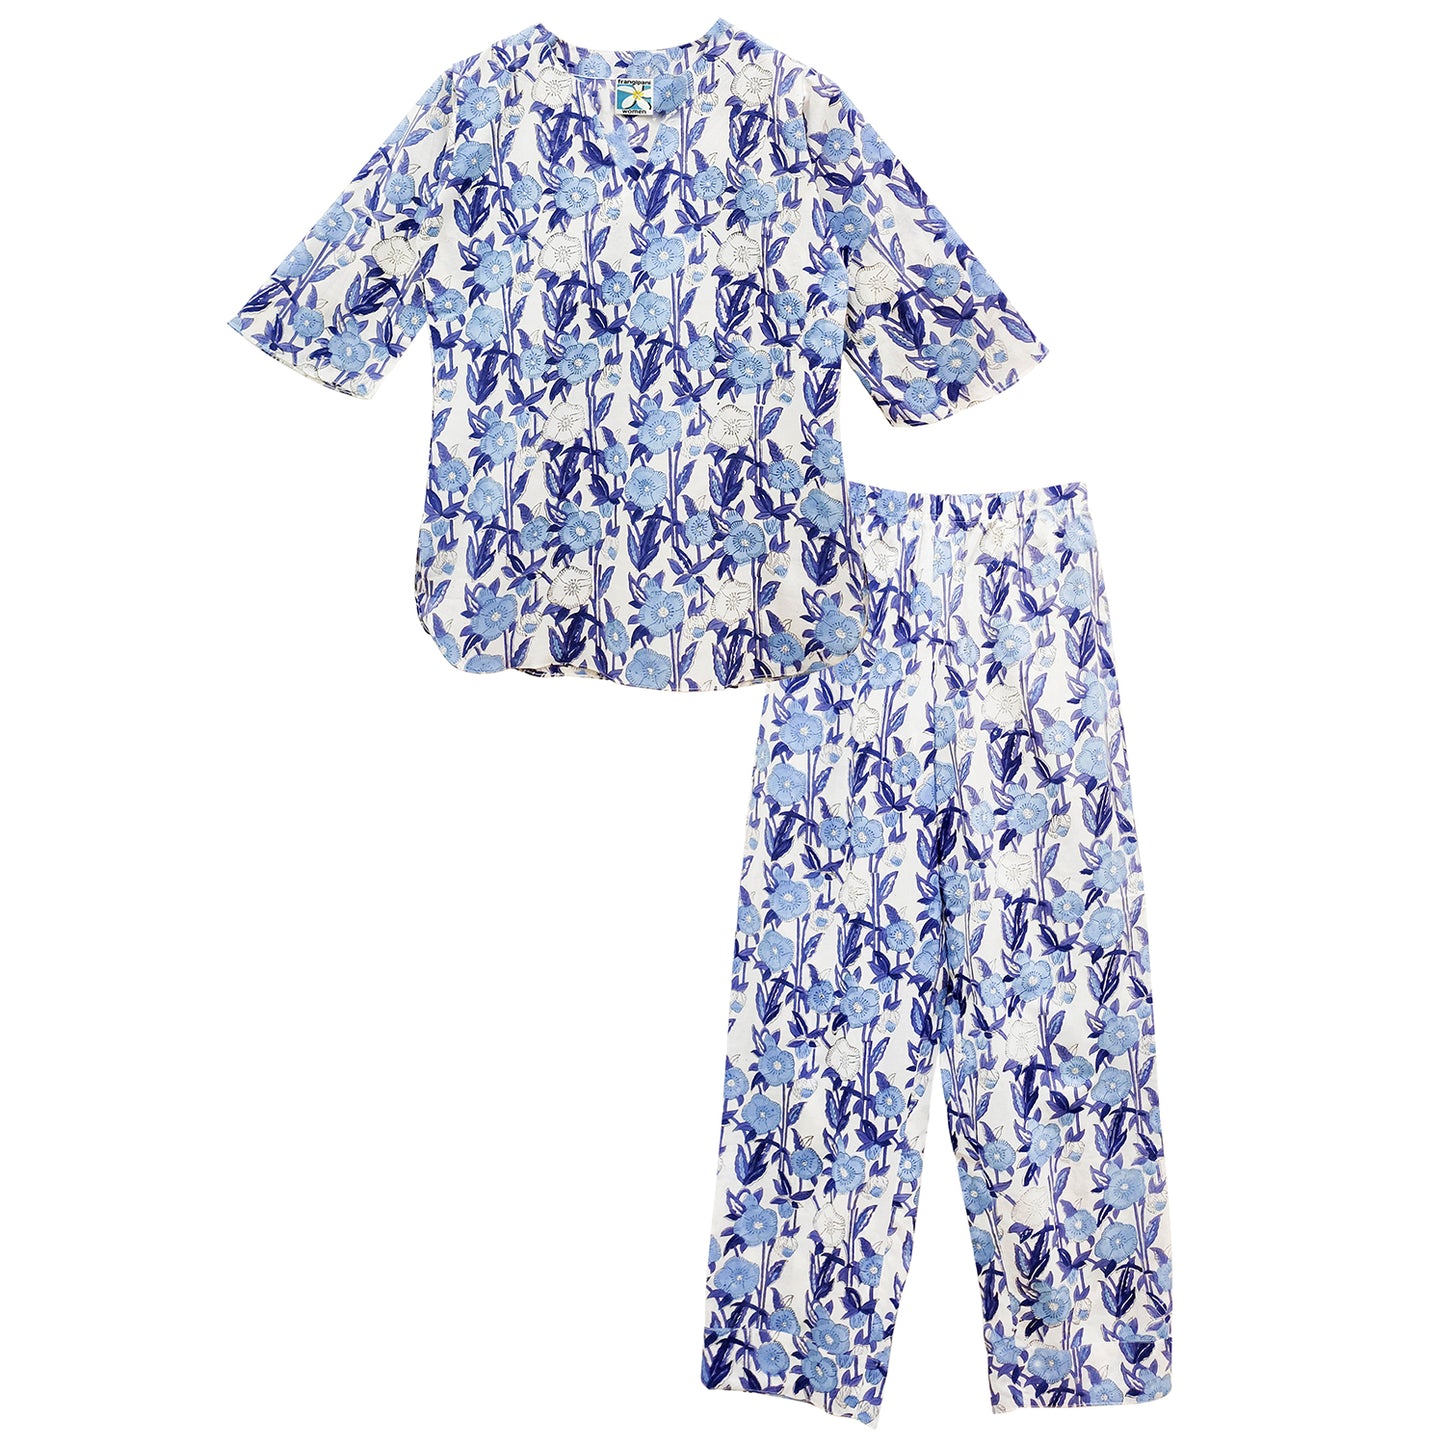 Carnation Forest Printed Pajama Set